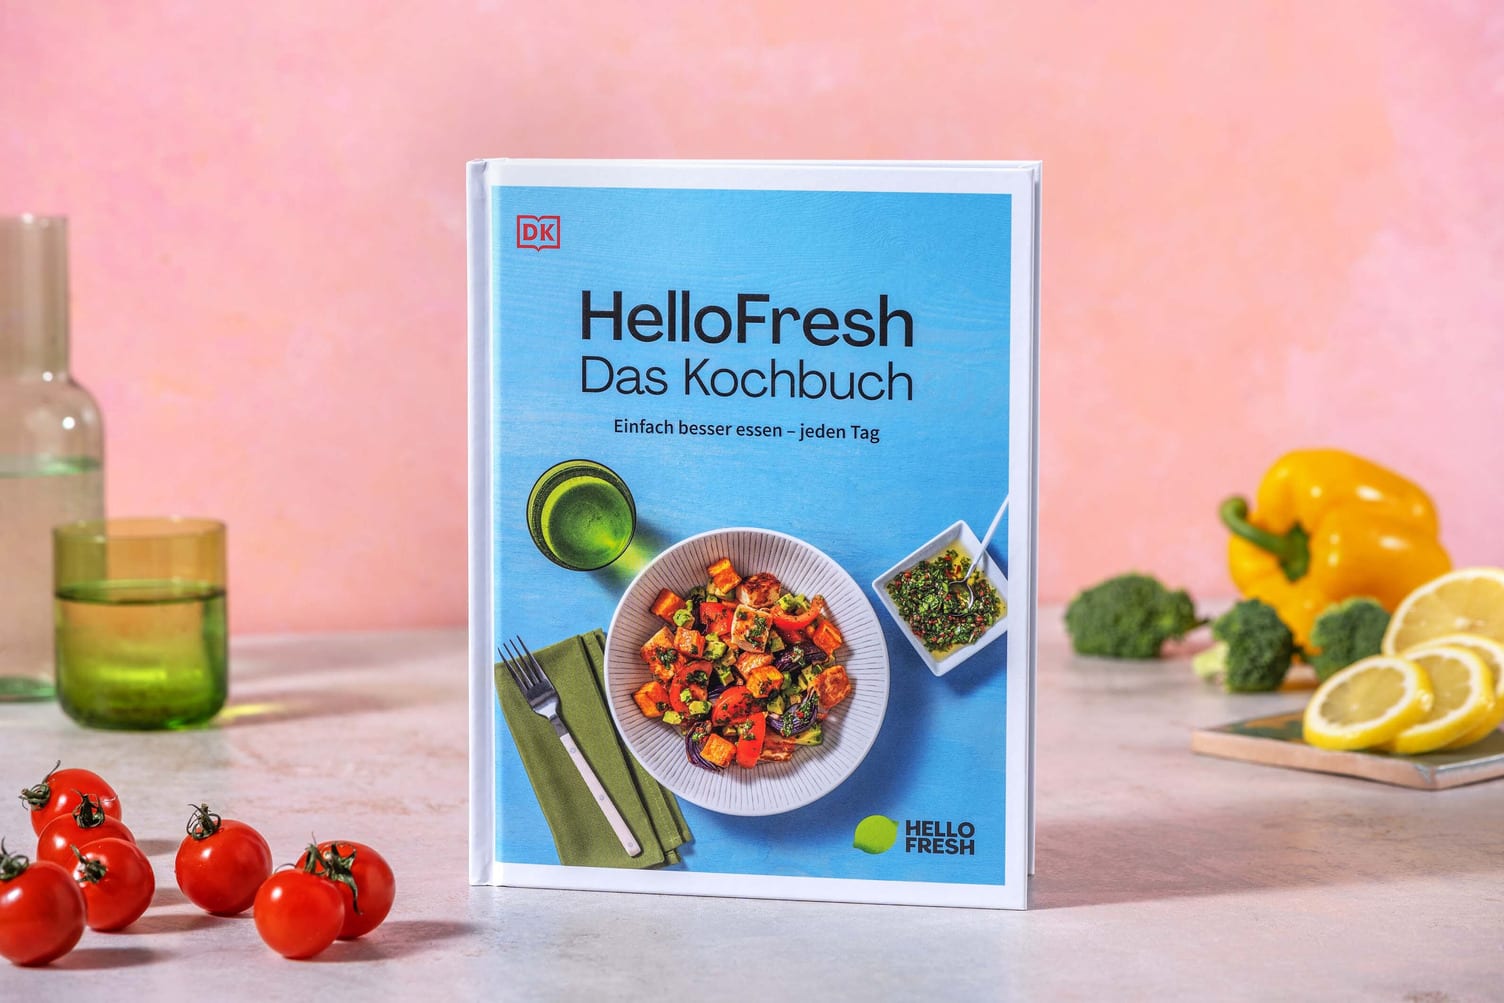 Das HelloFresh Kochbuch ist da!